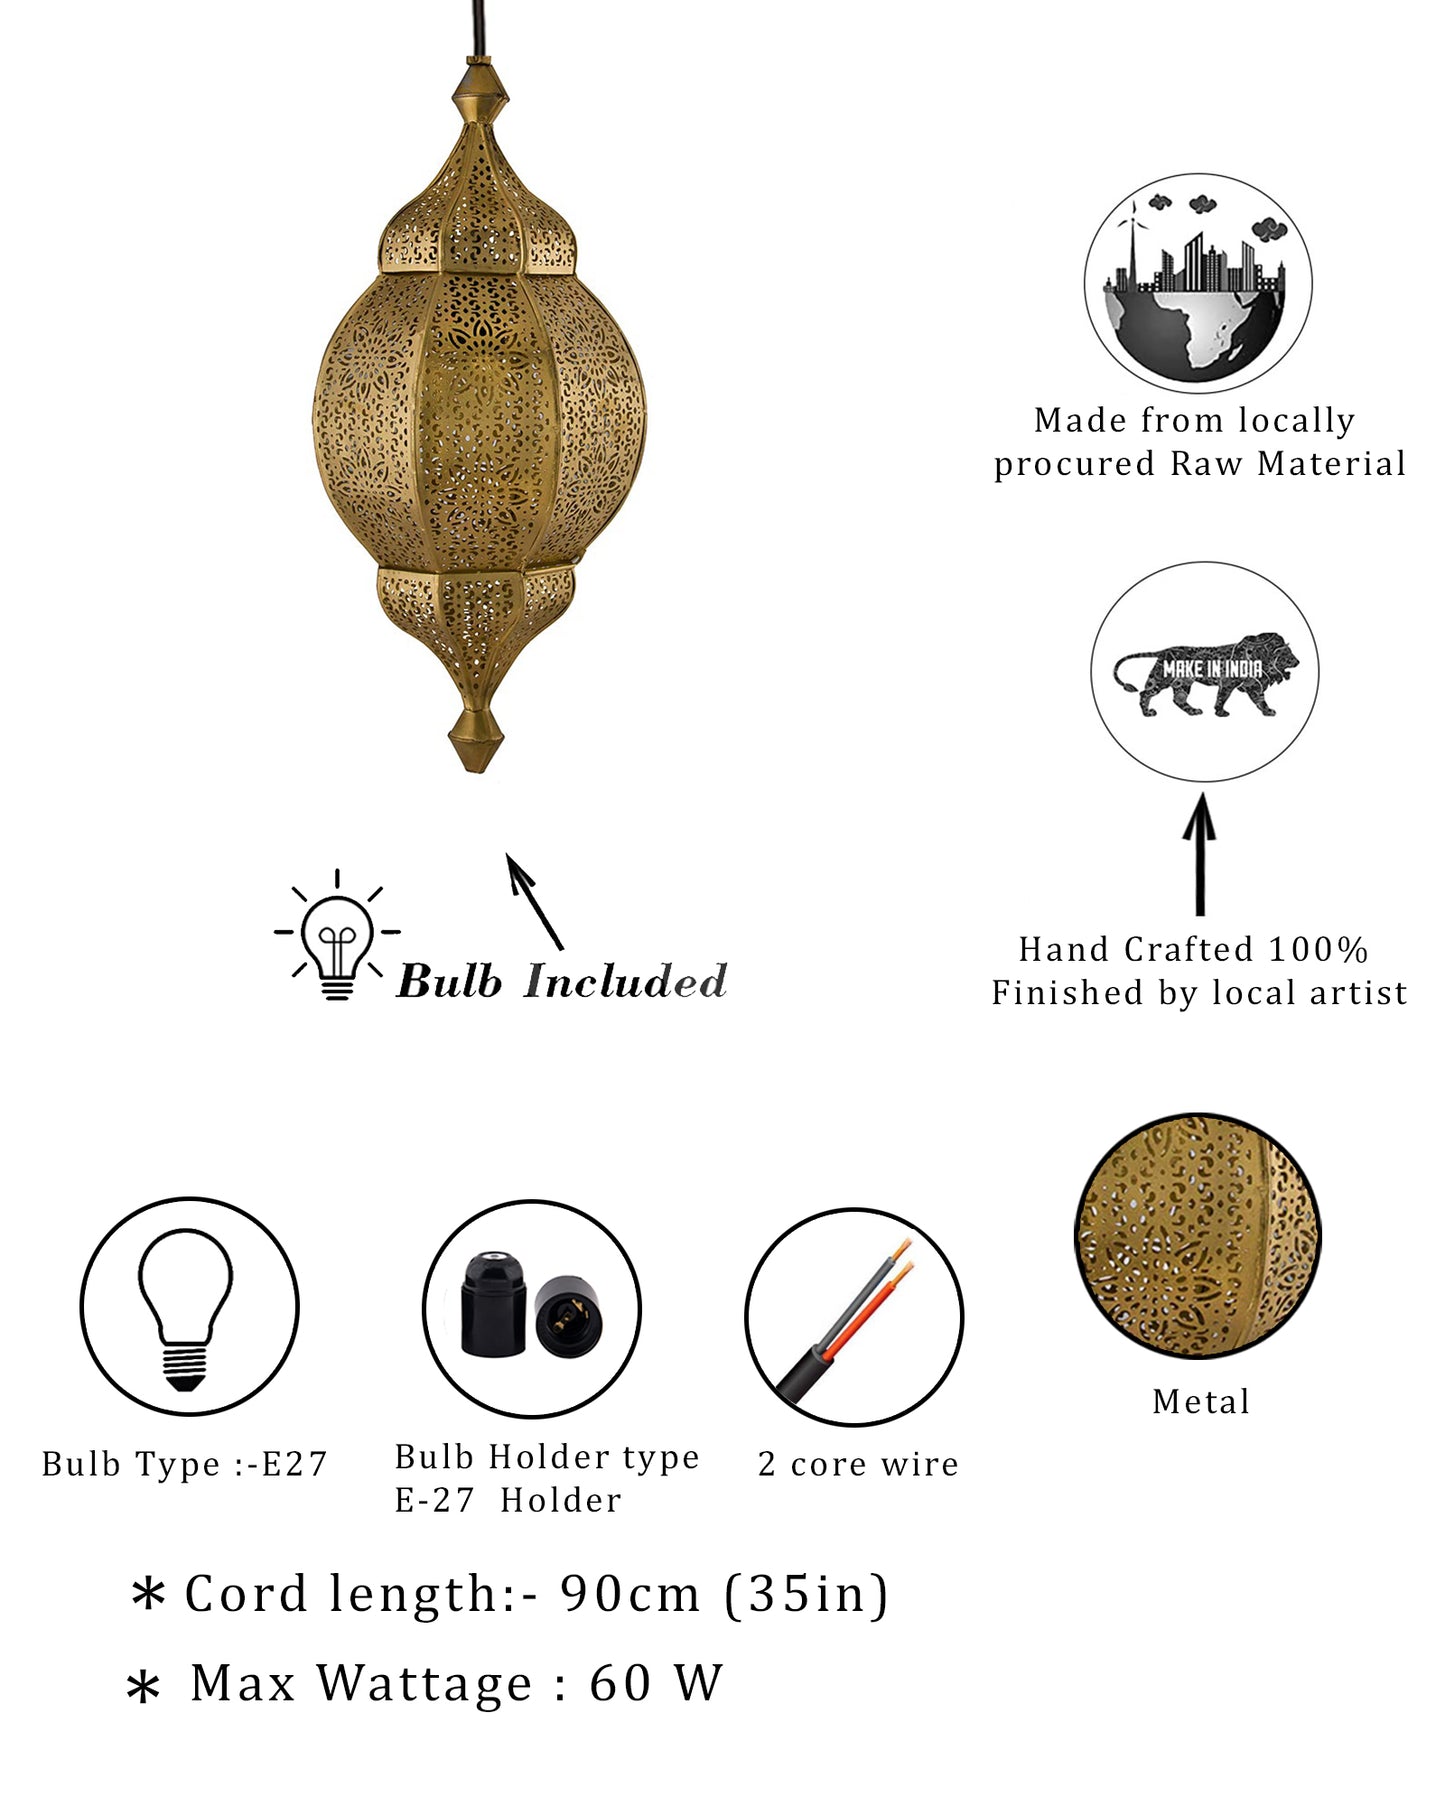 Classic Moroccan Orb Hanging Lamp, Antique hanging pendant light